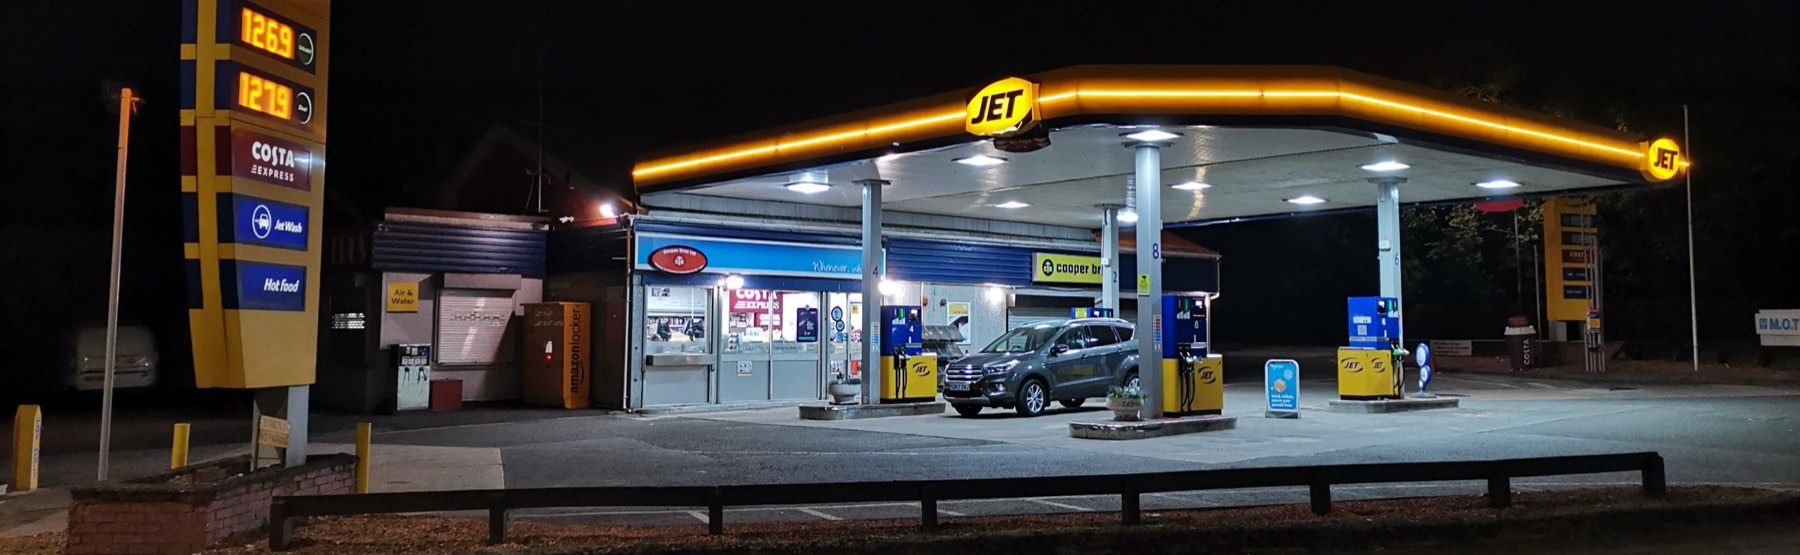 Jet Fuel forecourt image